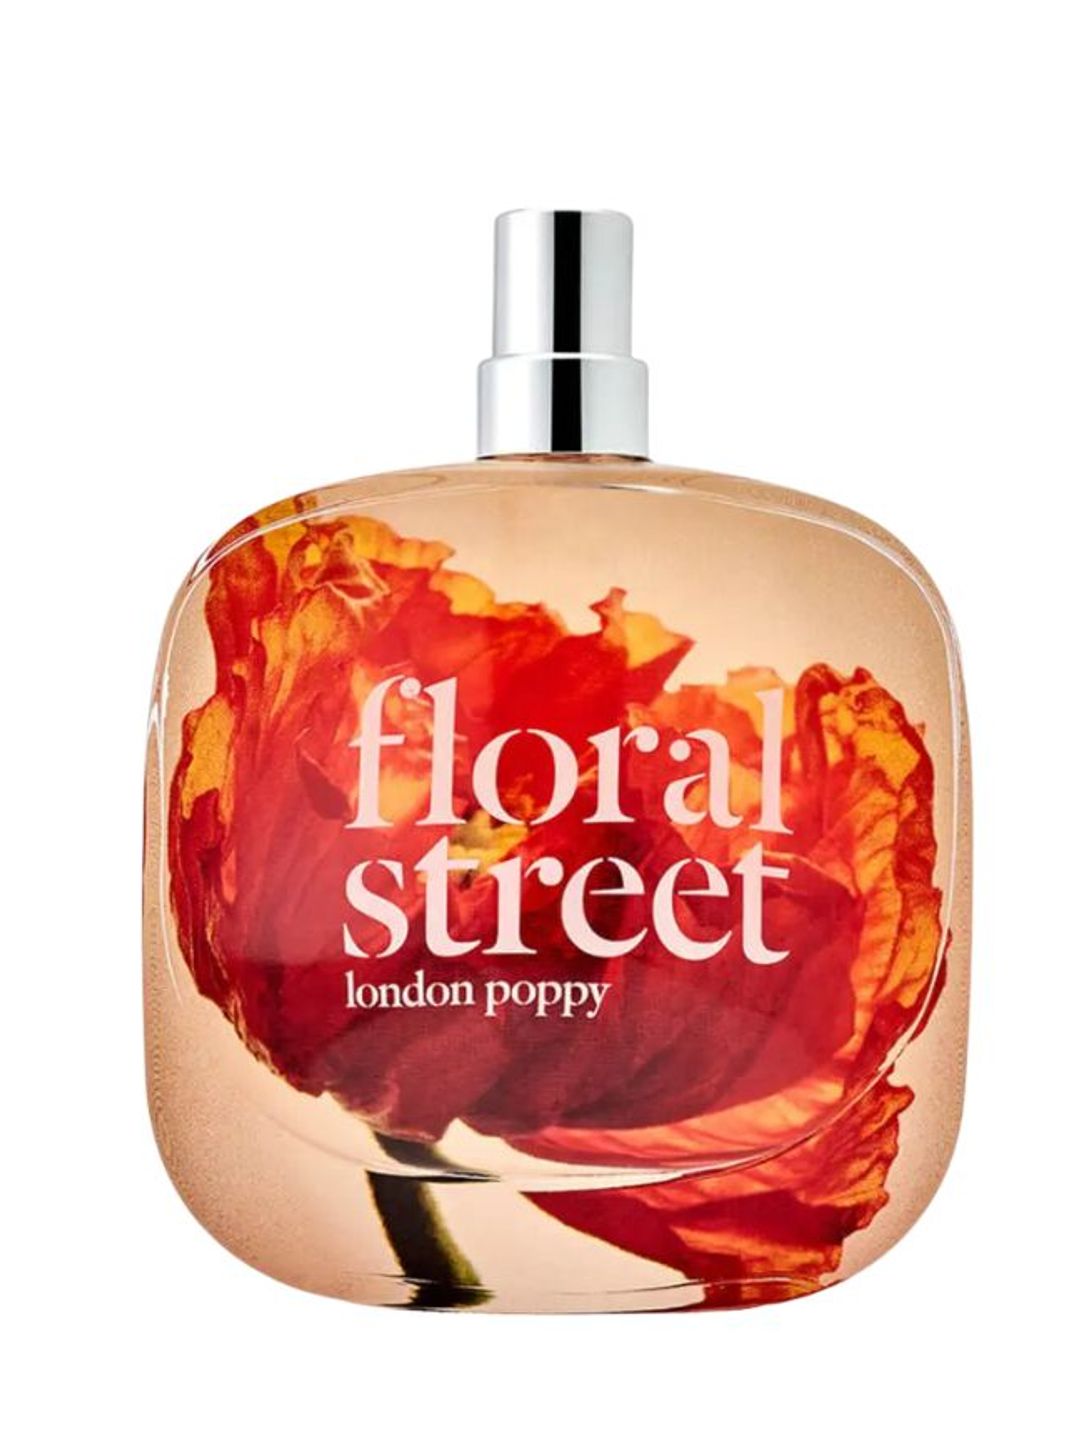 London Poppy - Floral Street